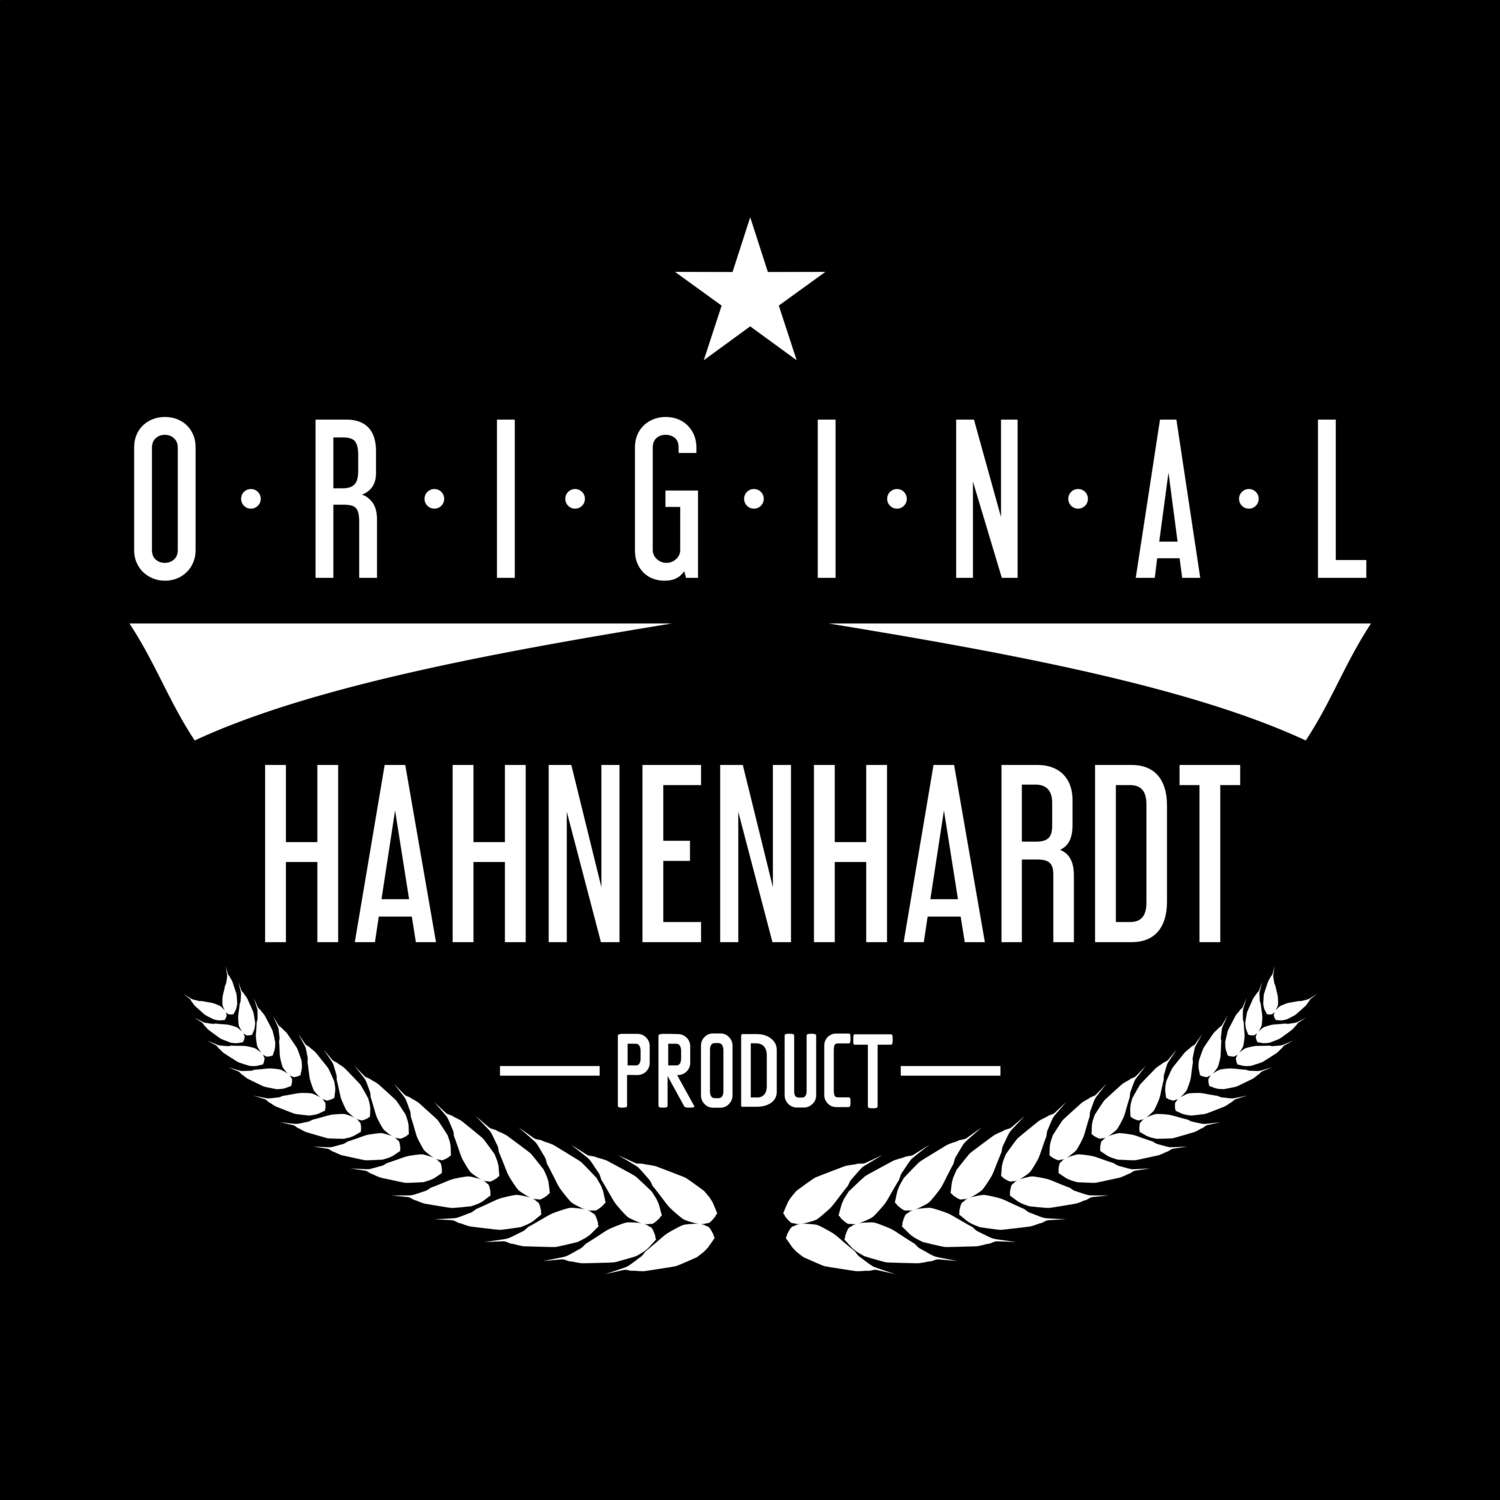 Hahnenhardt T-Shirt »Original Product«